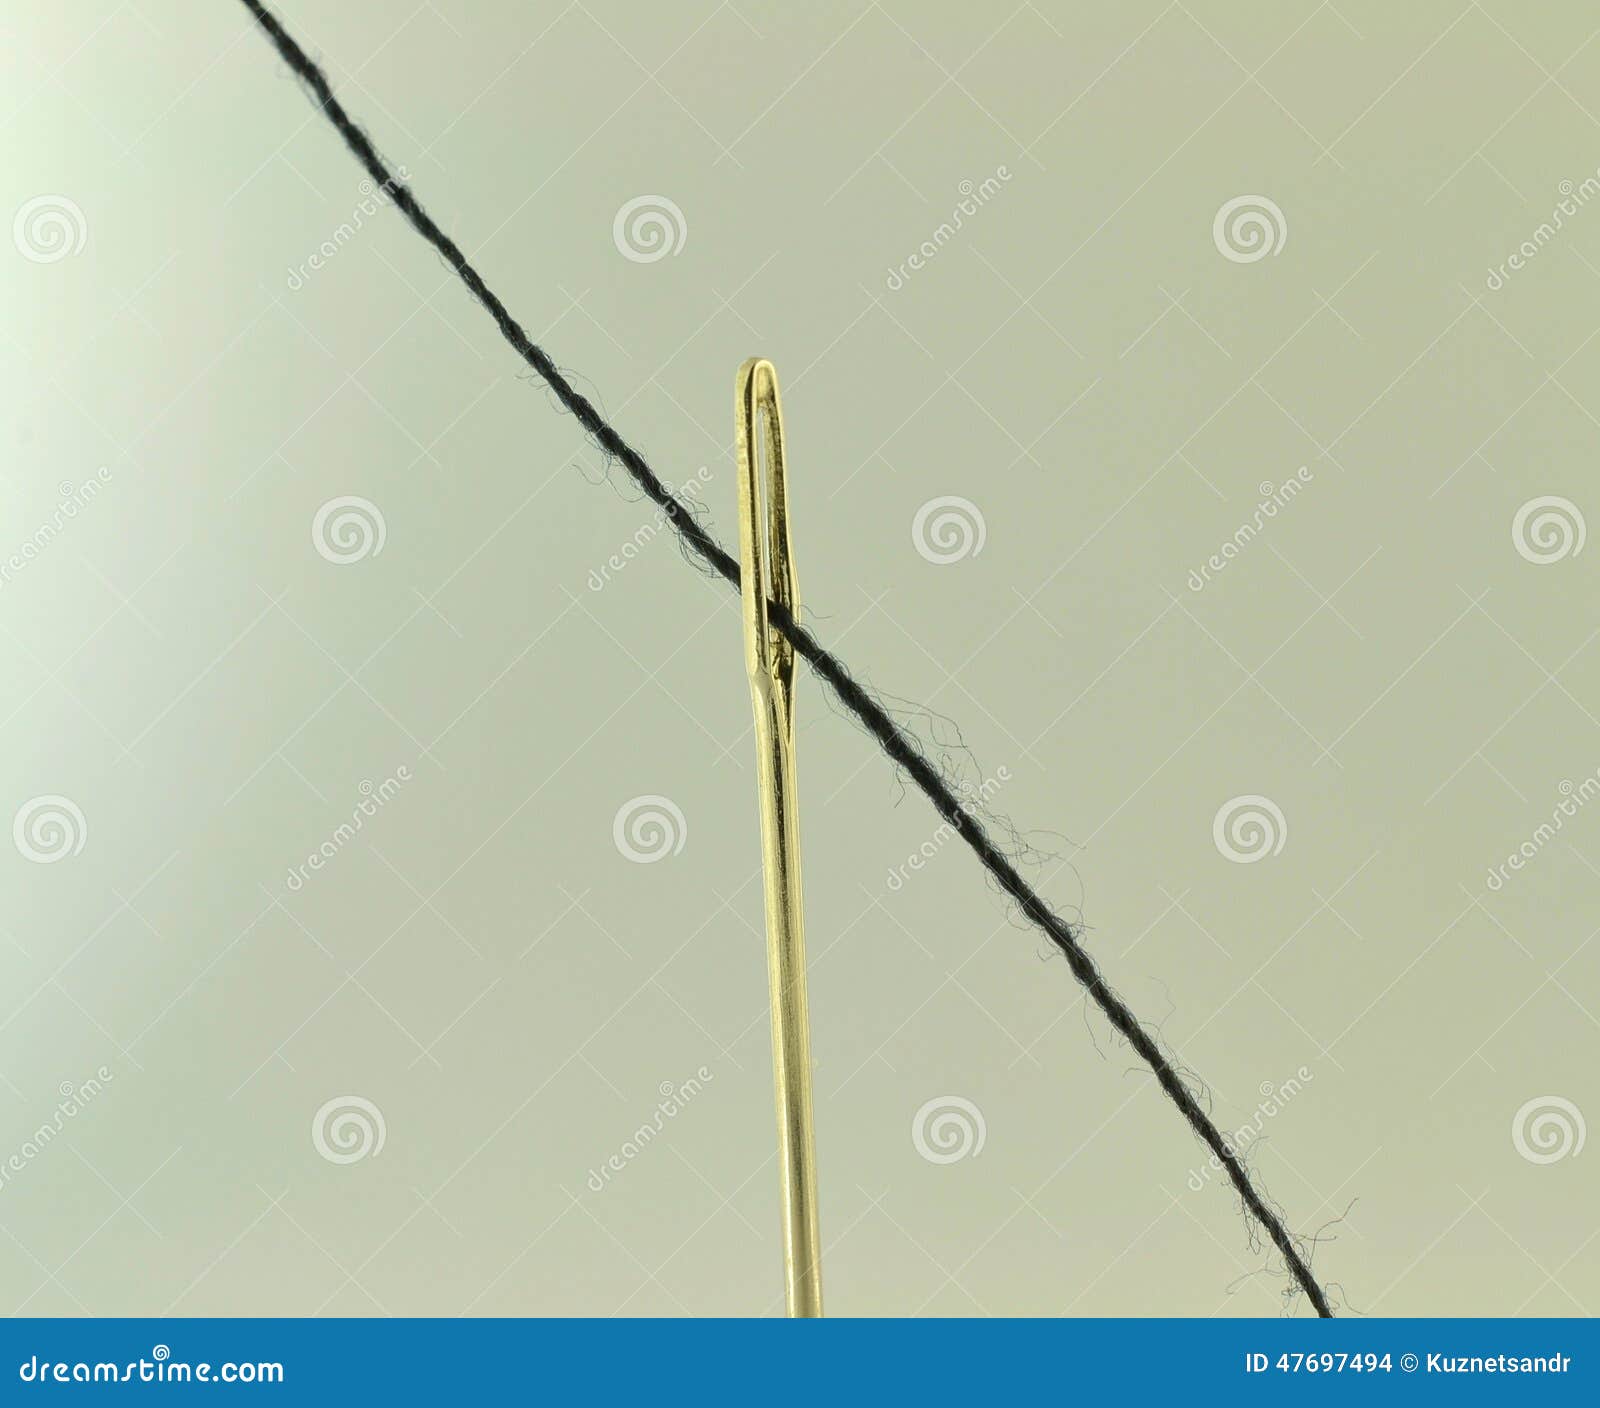 Thread and needle stock photo. Image of craft, shiny - 47697494